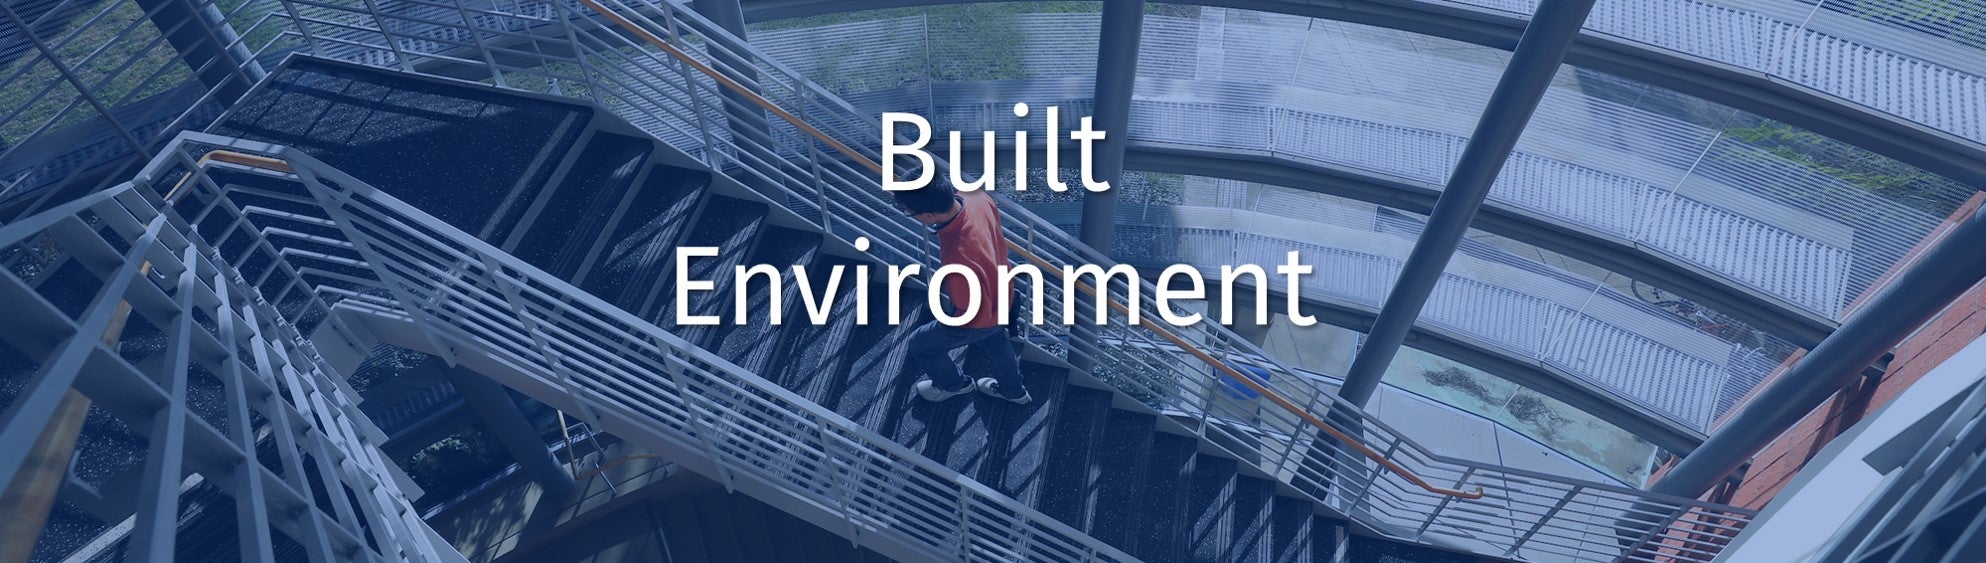 Built Environment Subcommitte - banner